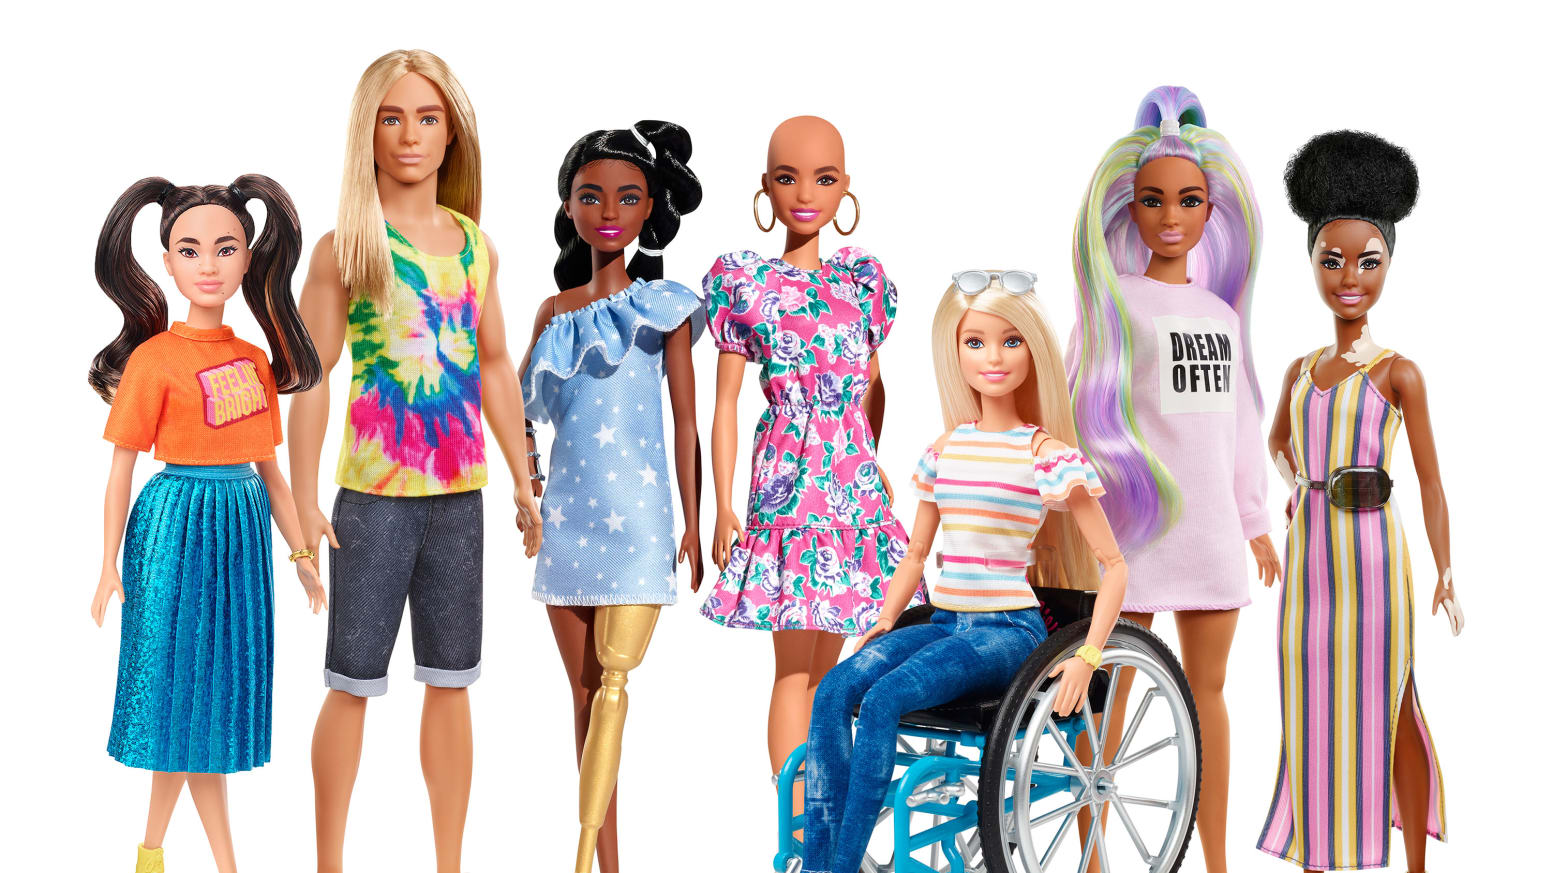 The new 2020 range of the Barbie Fashionistas line.